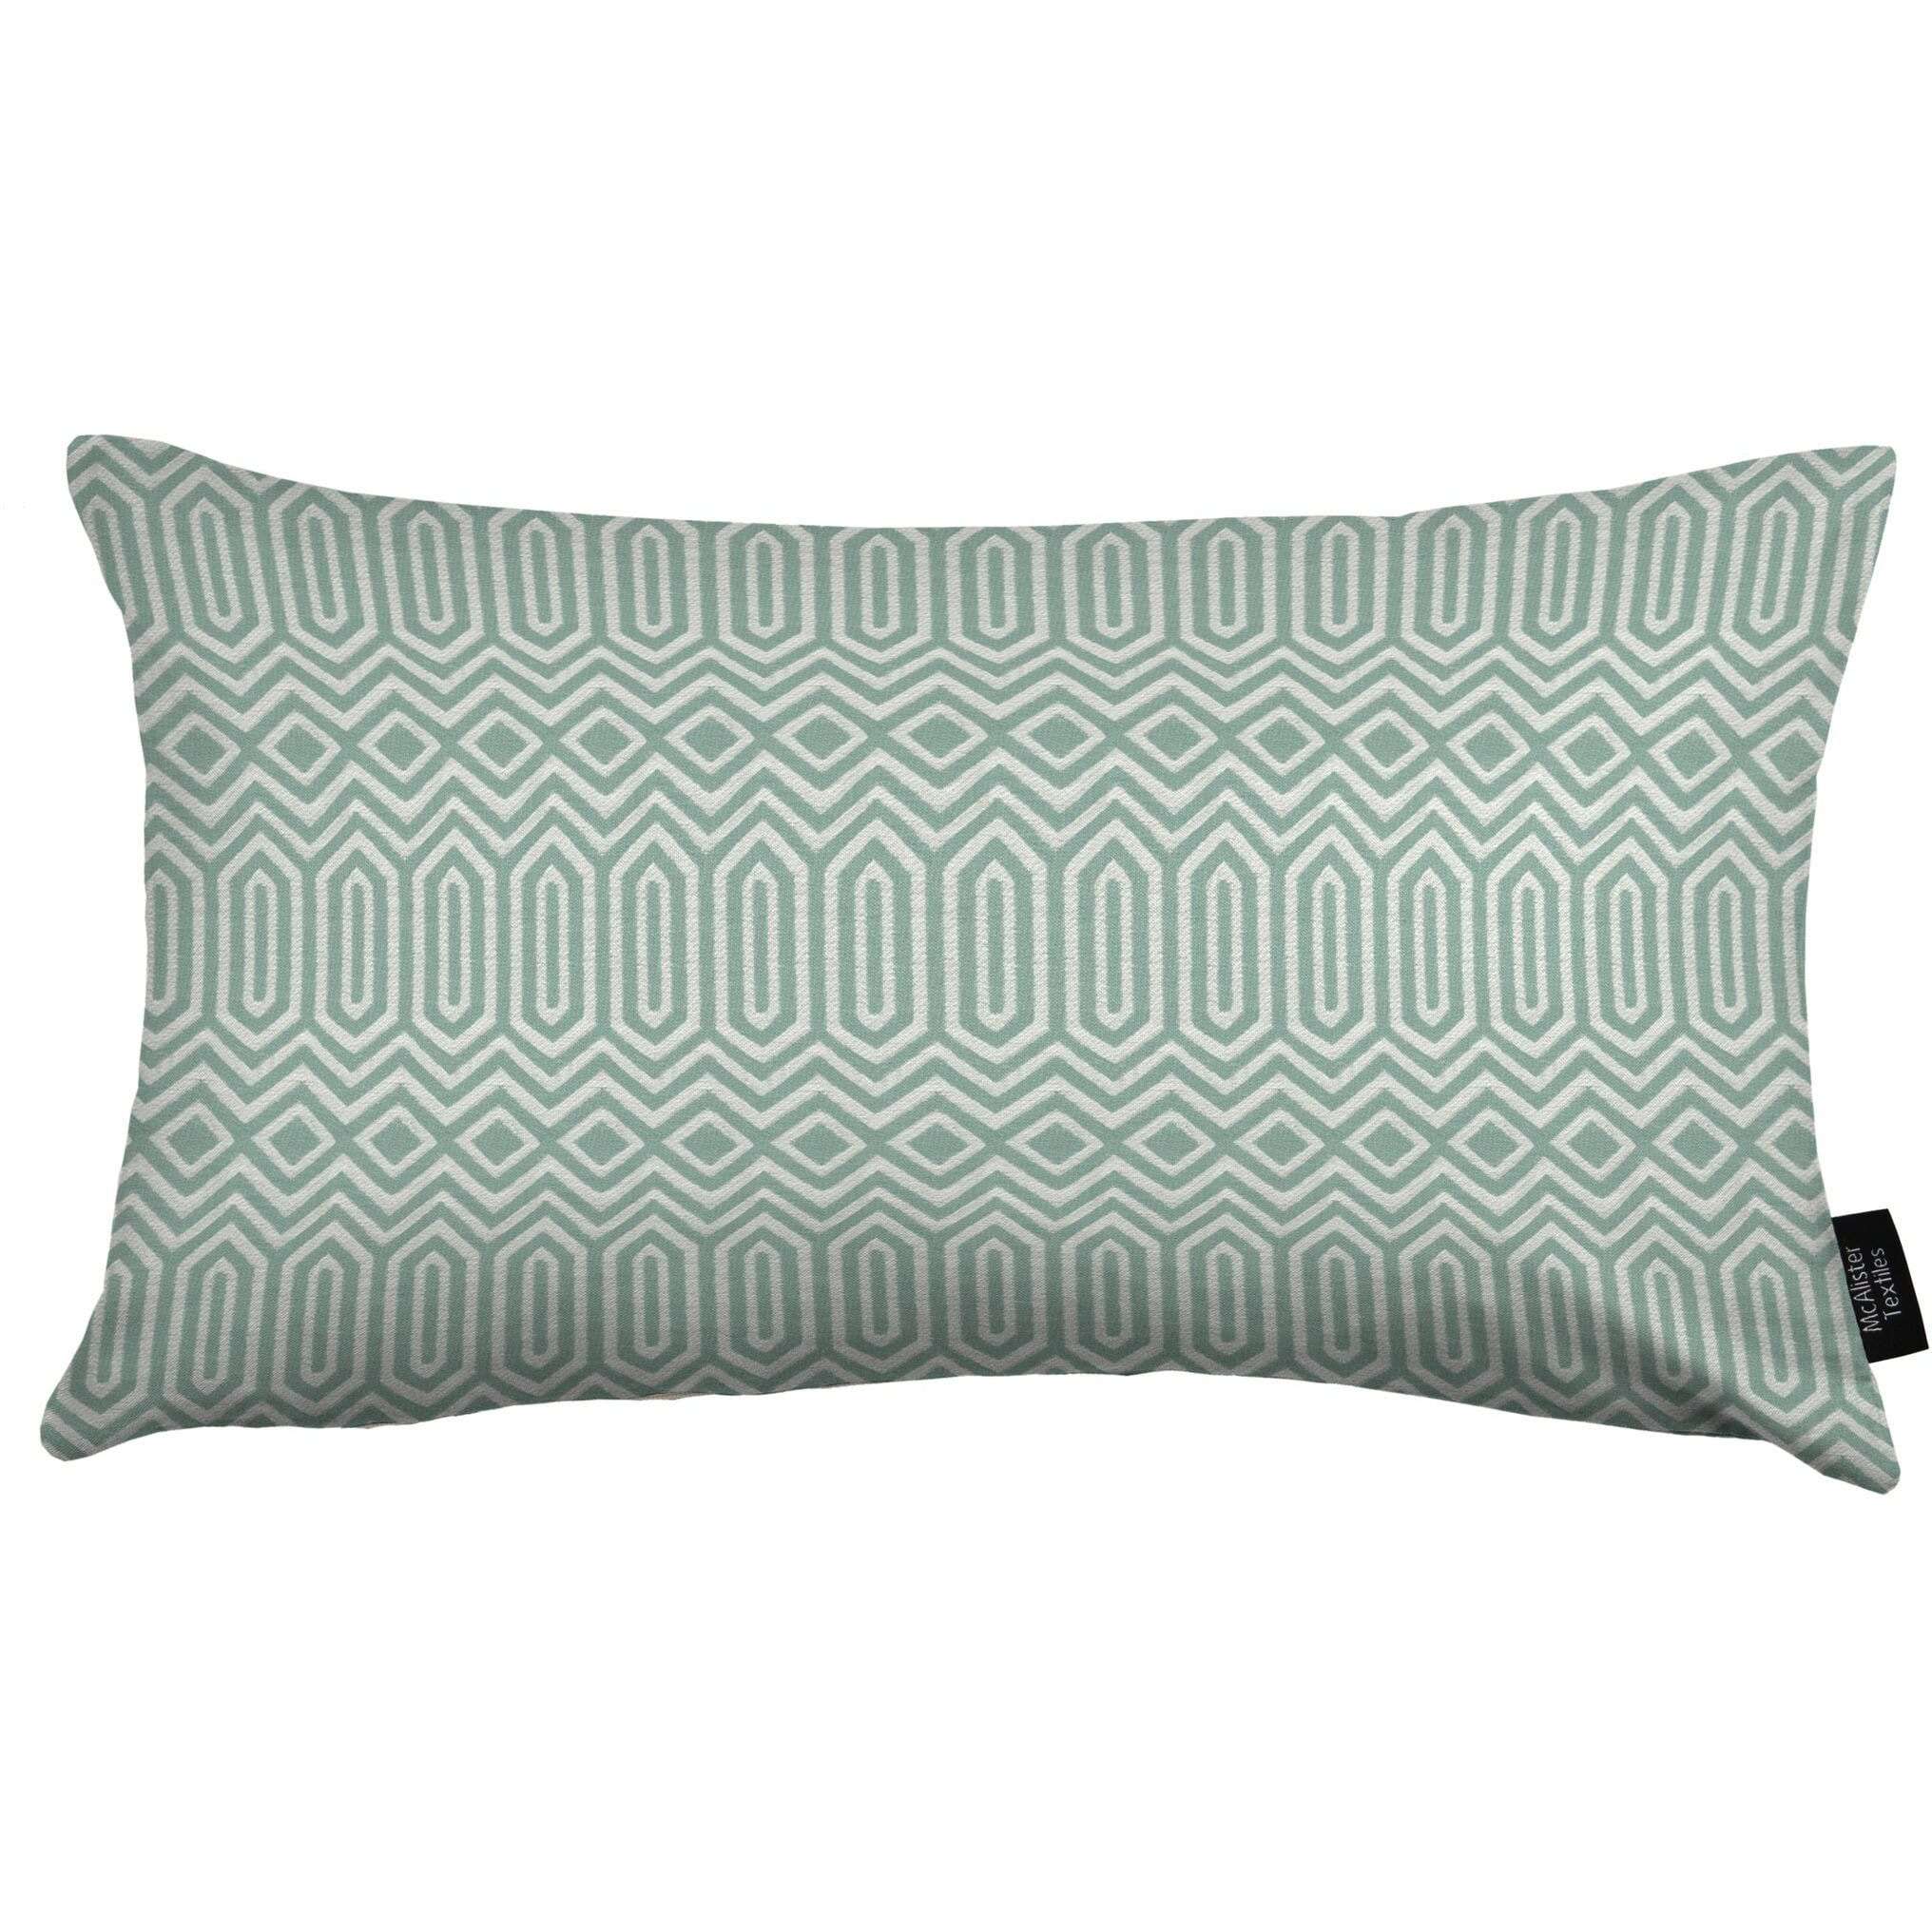 McAlister Textiles Colorado Geometric Duck Egg Blue Pillow Pillow Cover Only 50cm x 30cm 